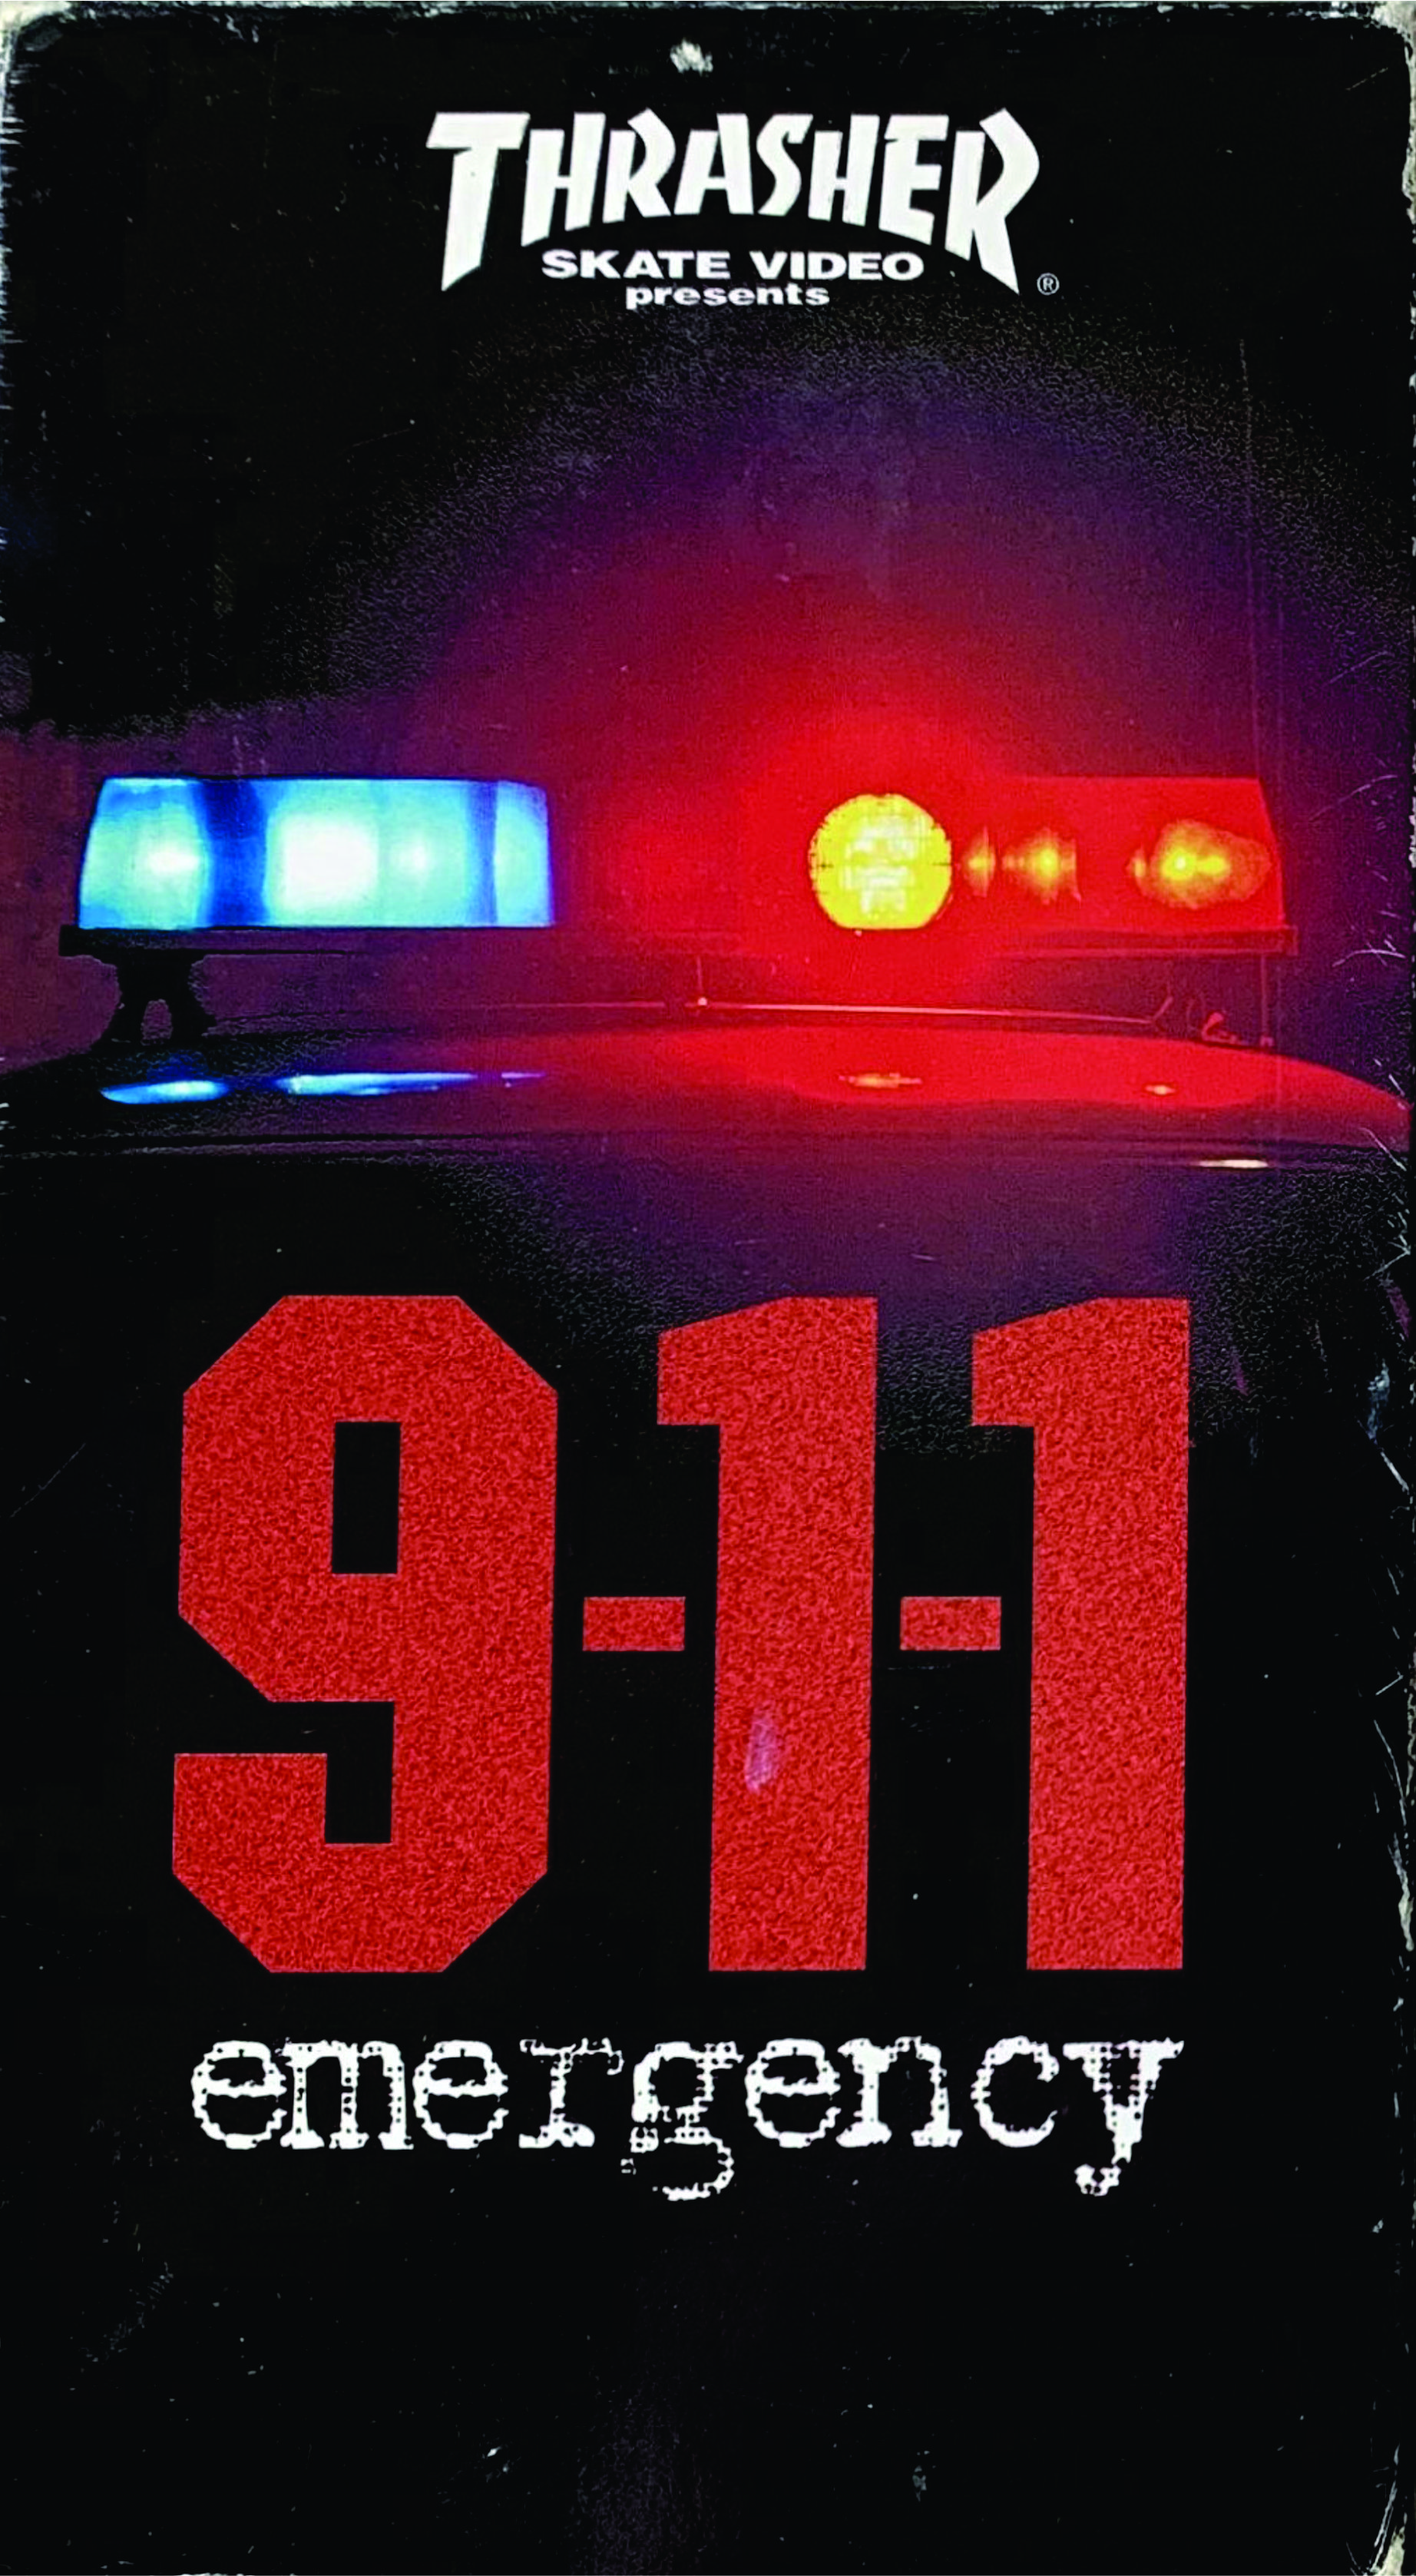 Thrasher - 911 Emergency cover